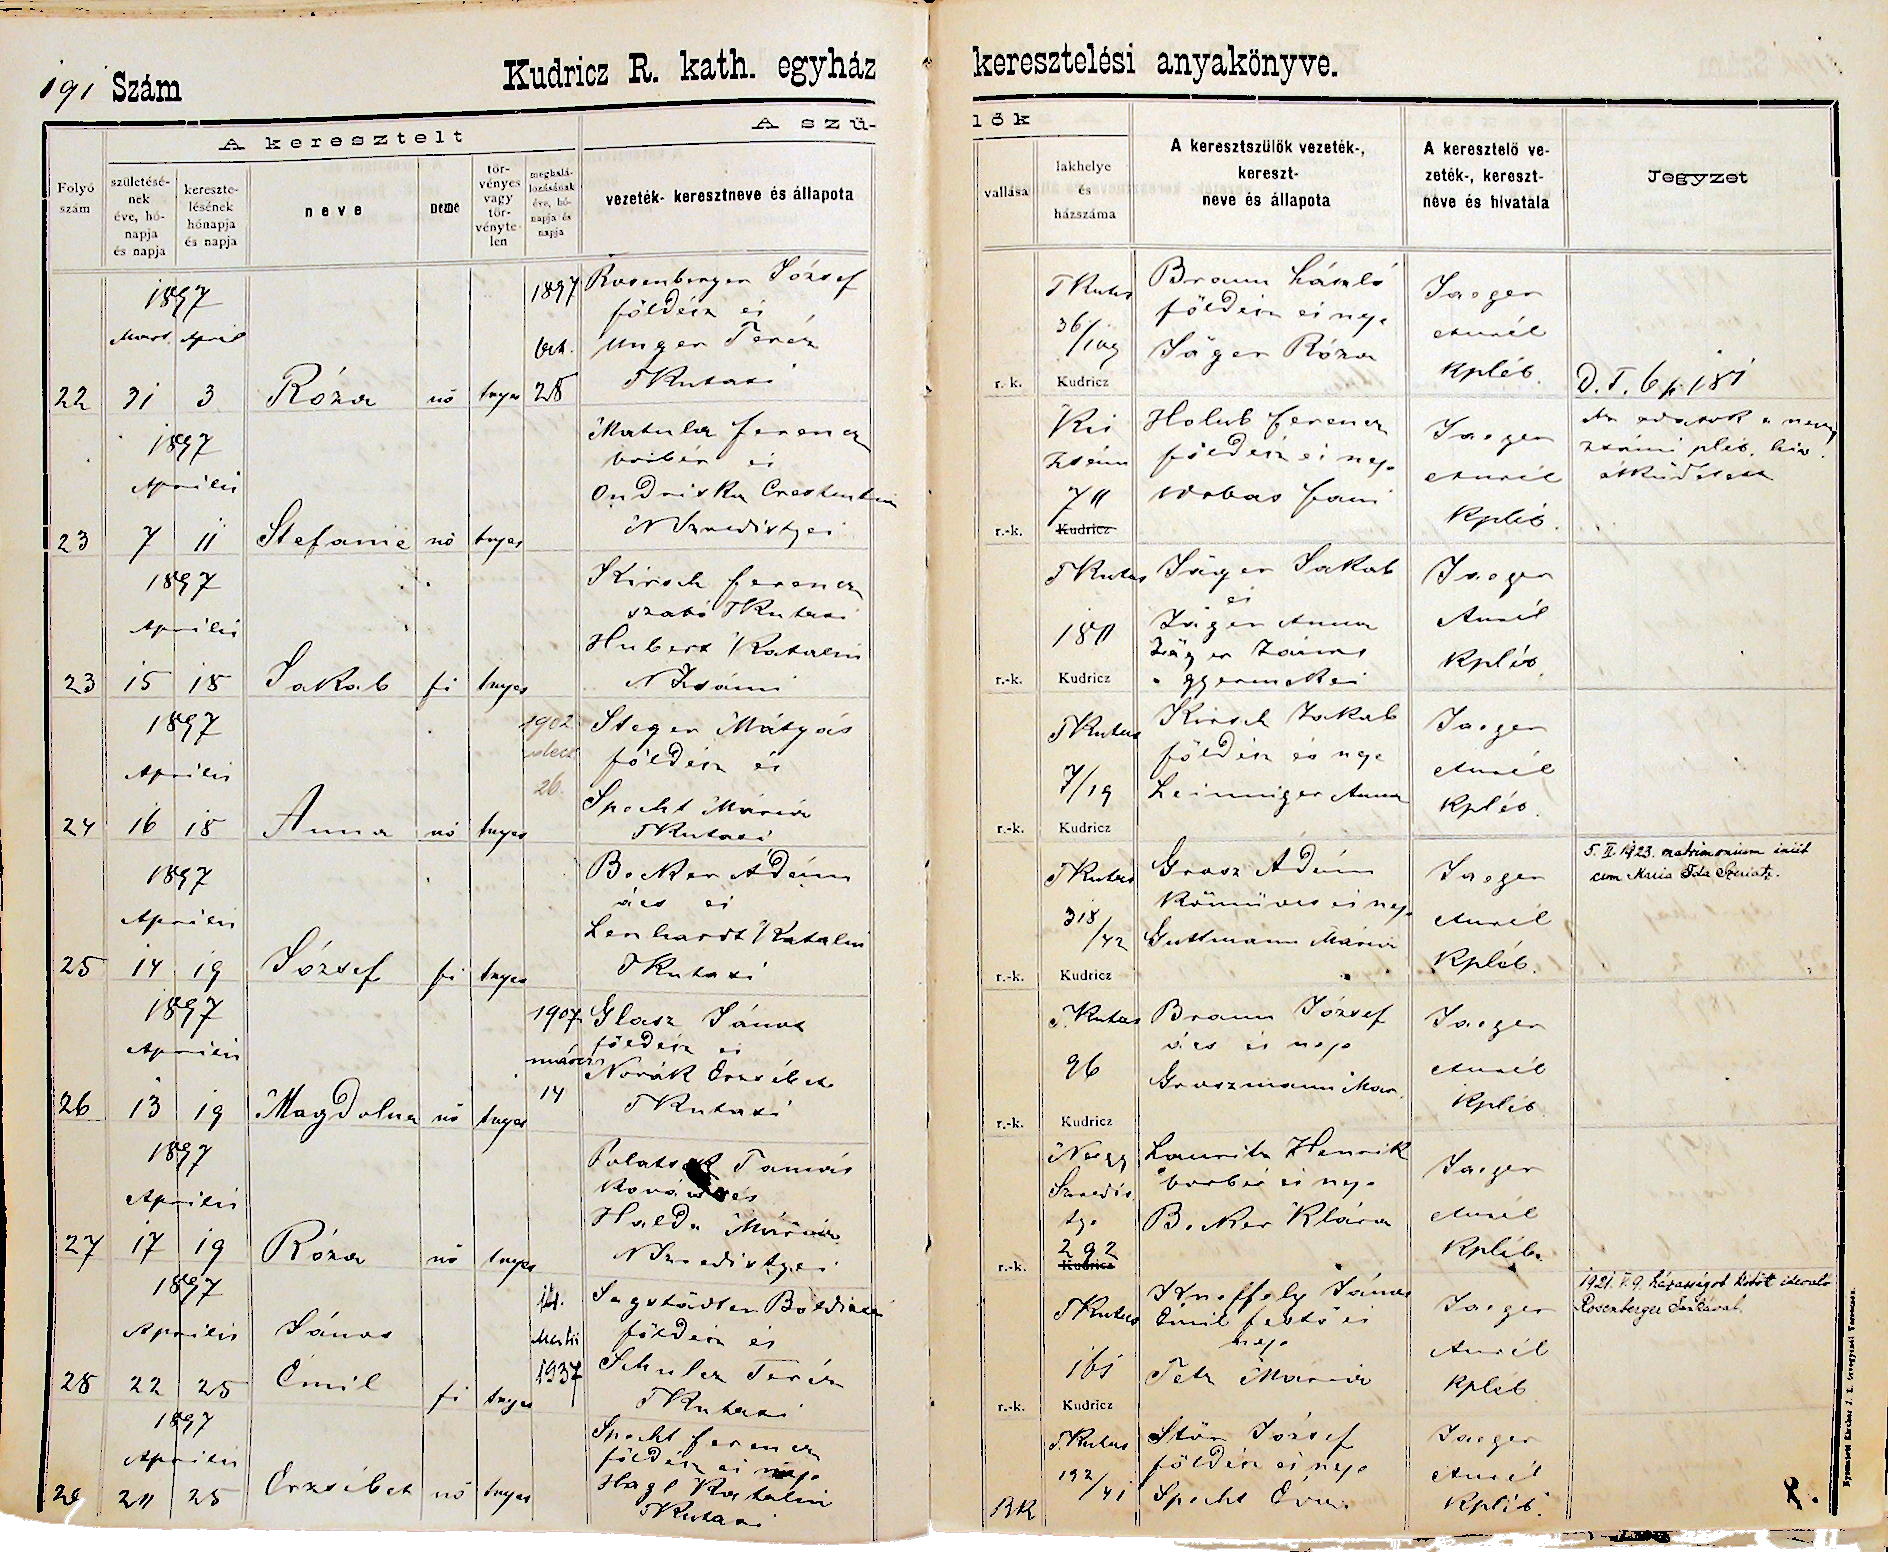 images/church_records/BIRTHS/1884-1899B/1897/191